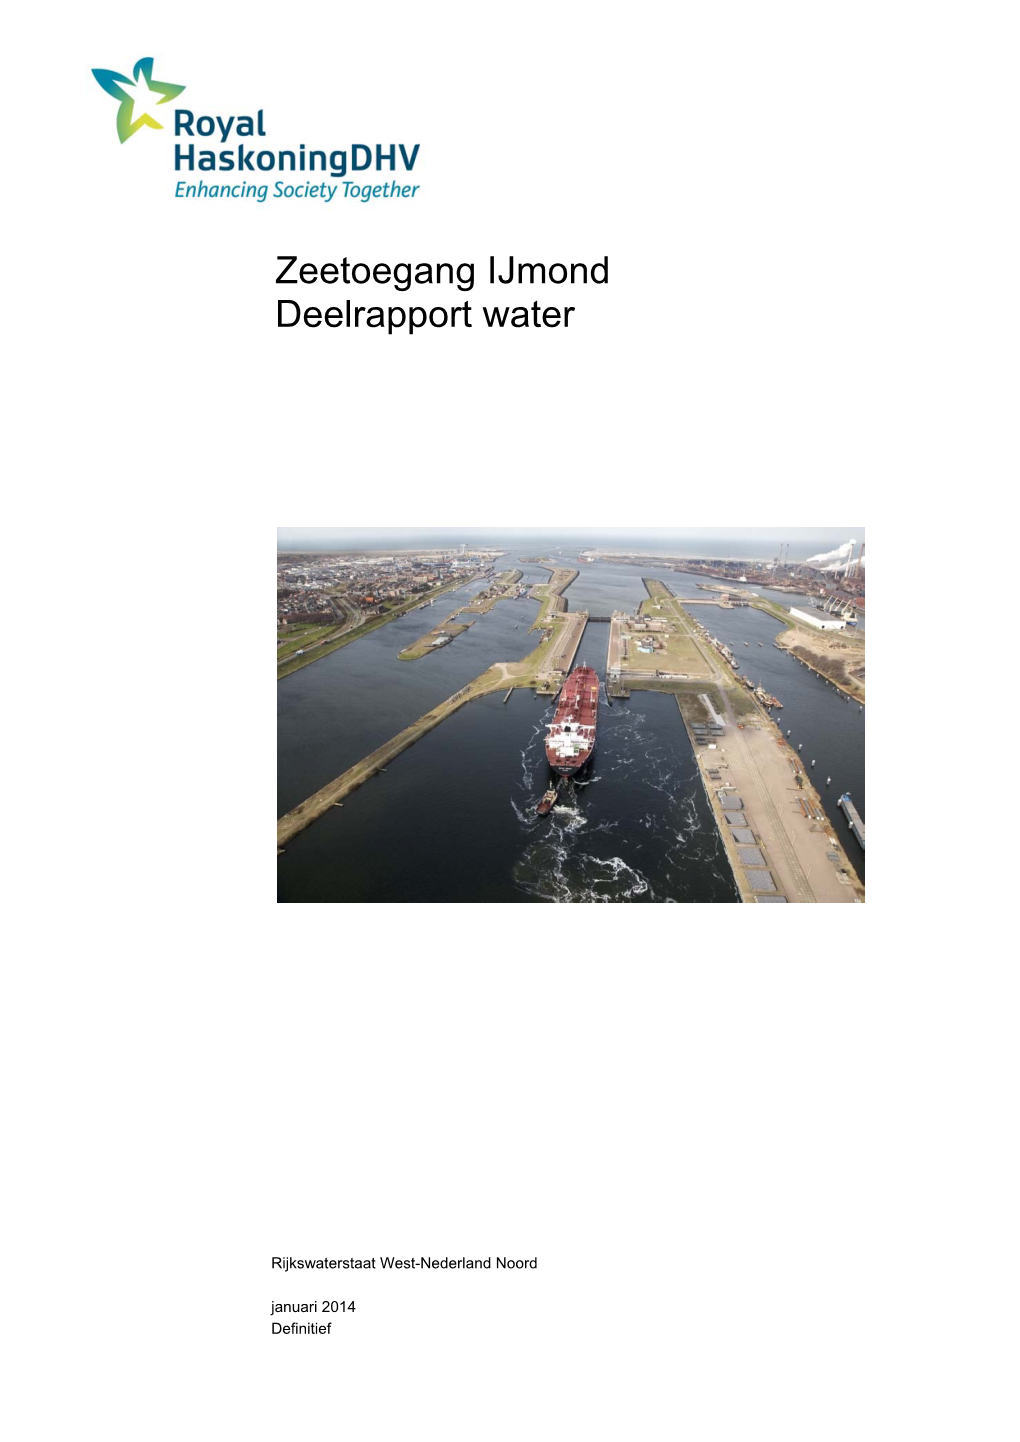 Zeetoegang Ijmond Deelrapport Water